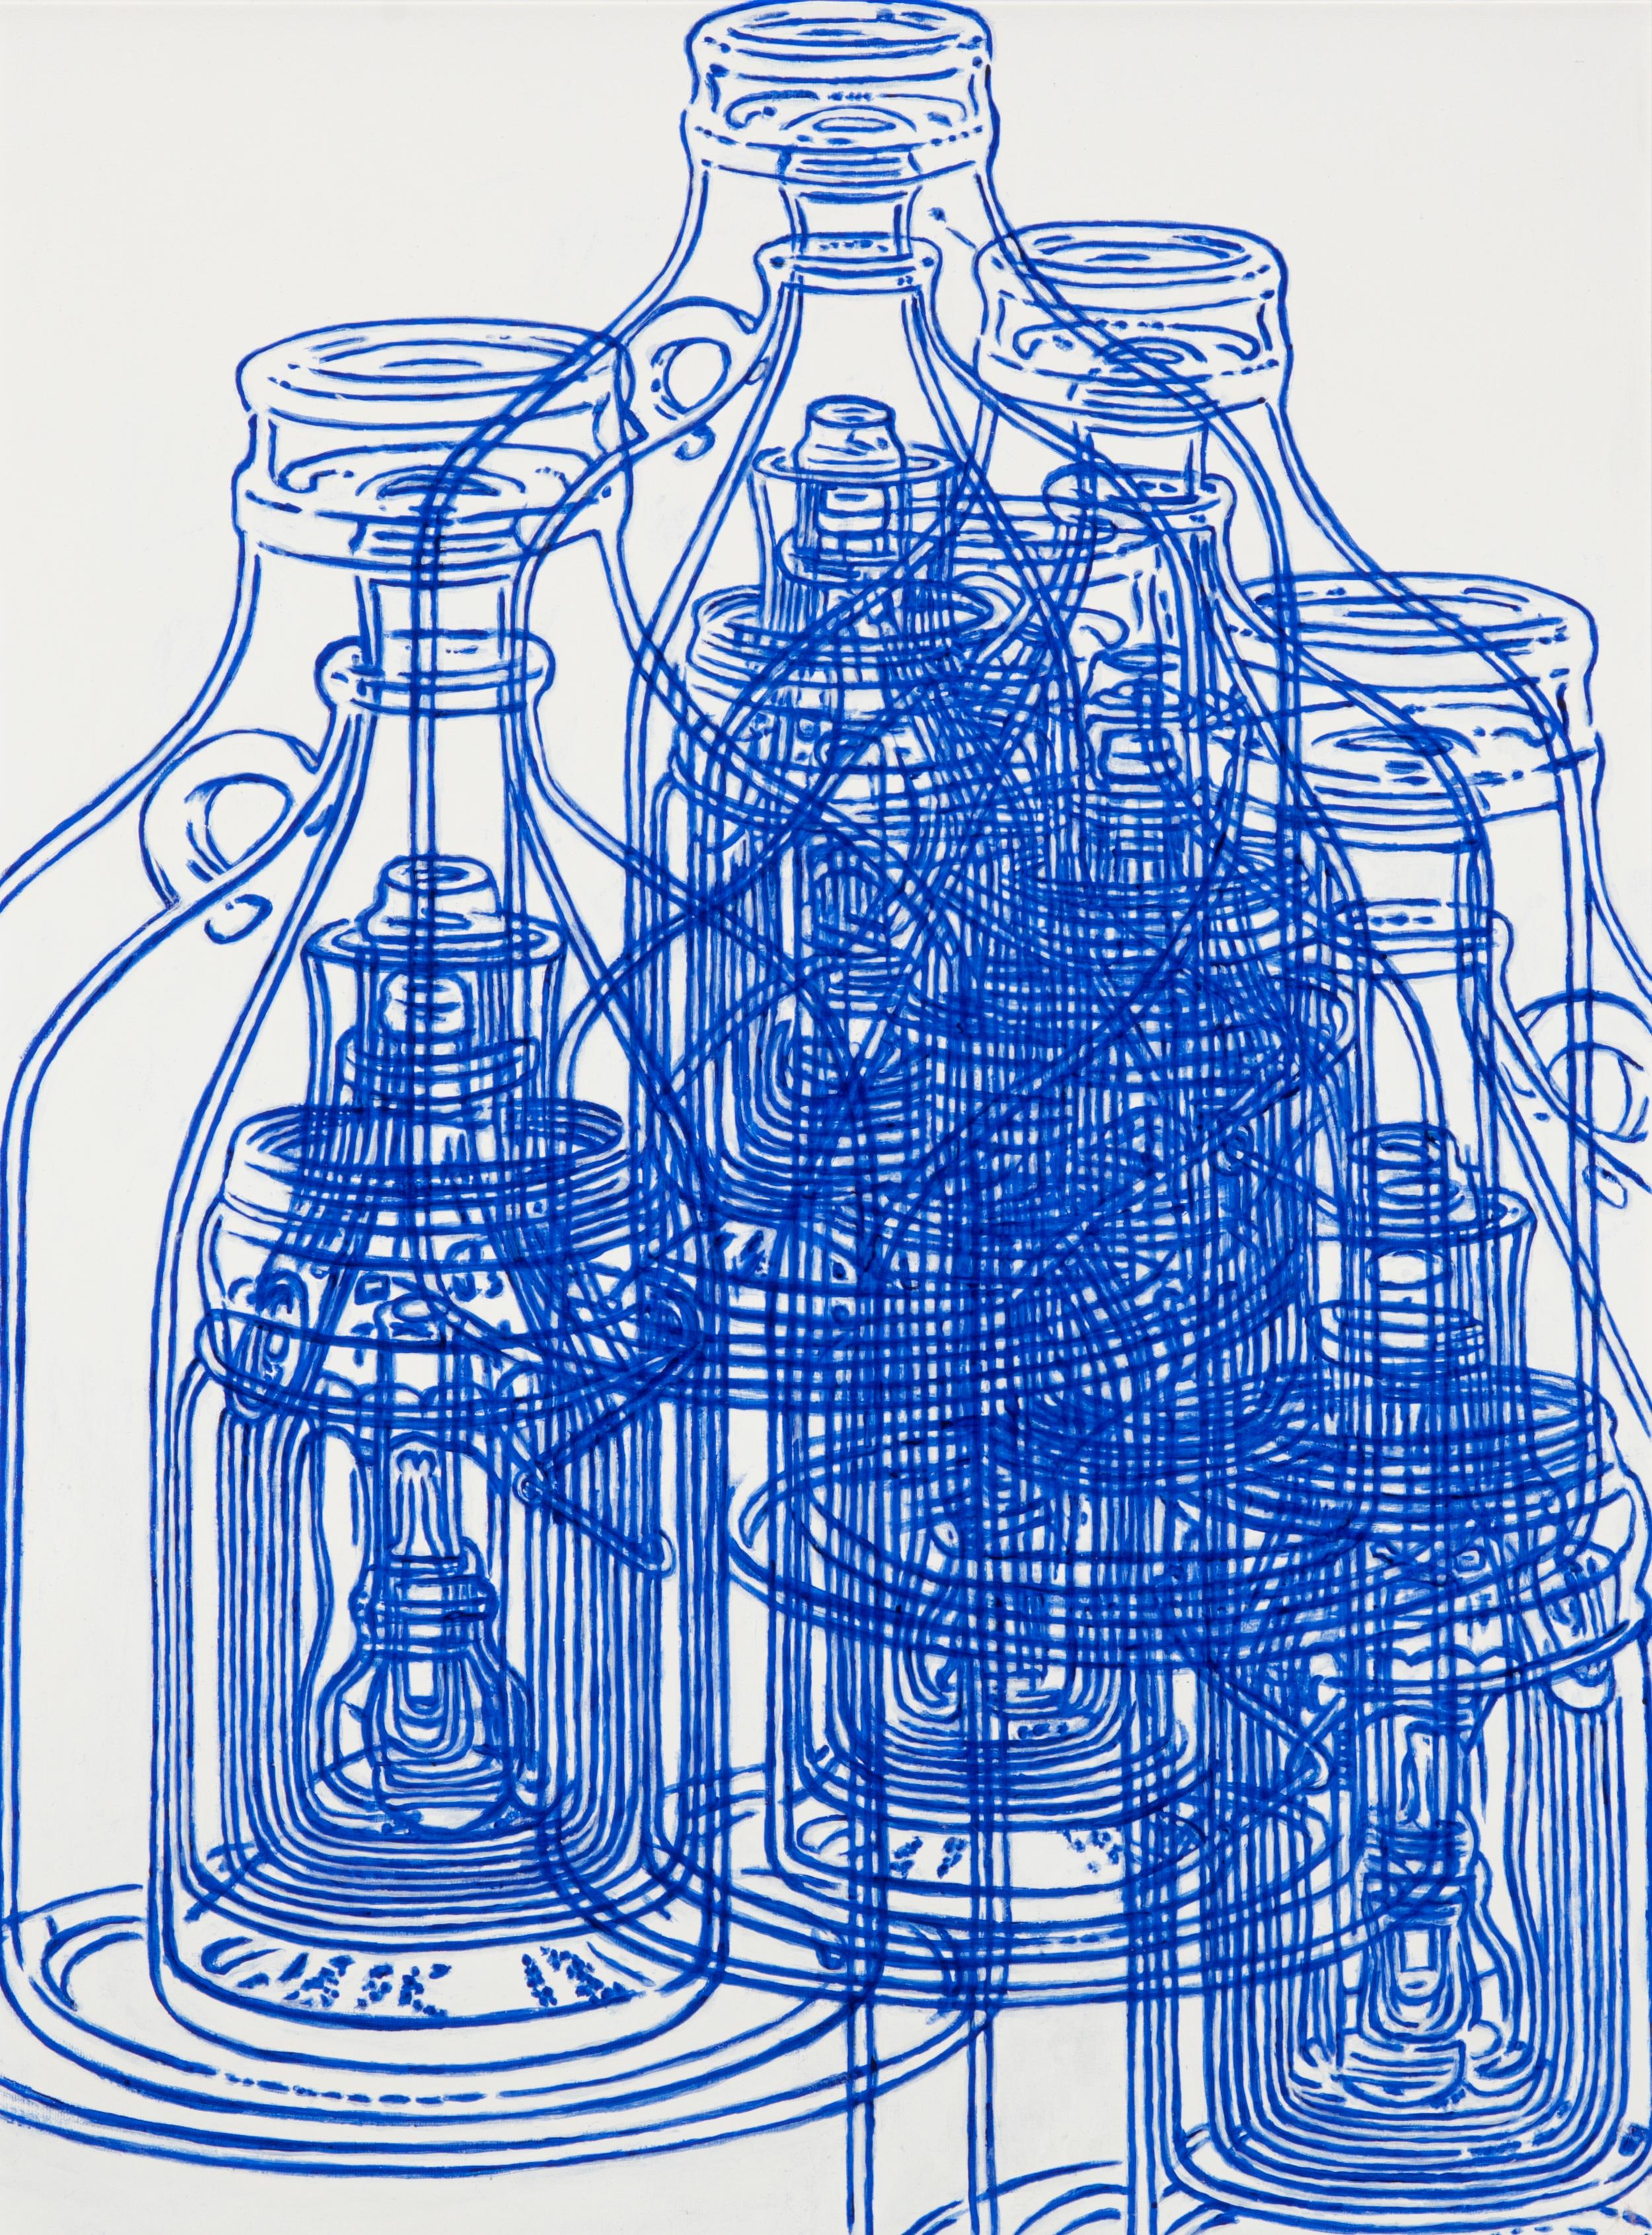  Rob Scholte (Dutch 1958). Composition with bottles, 2004. - Rob Scholte